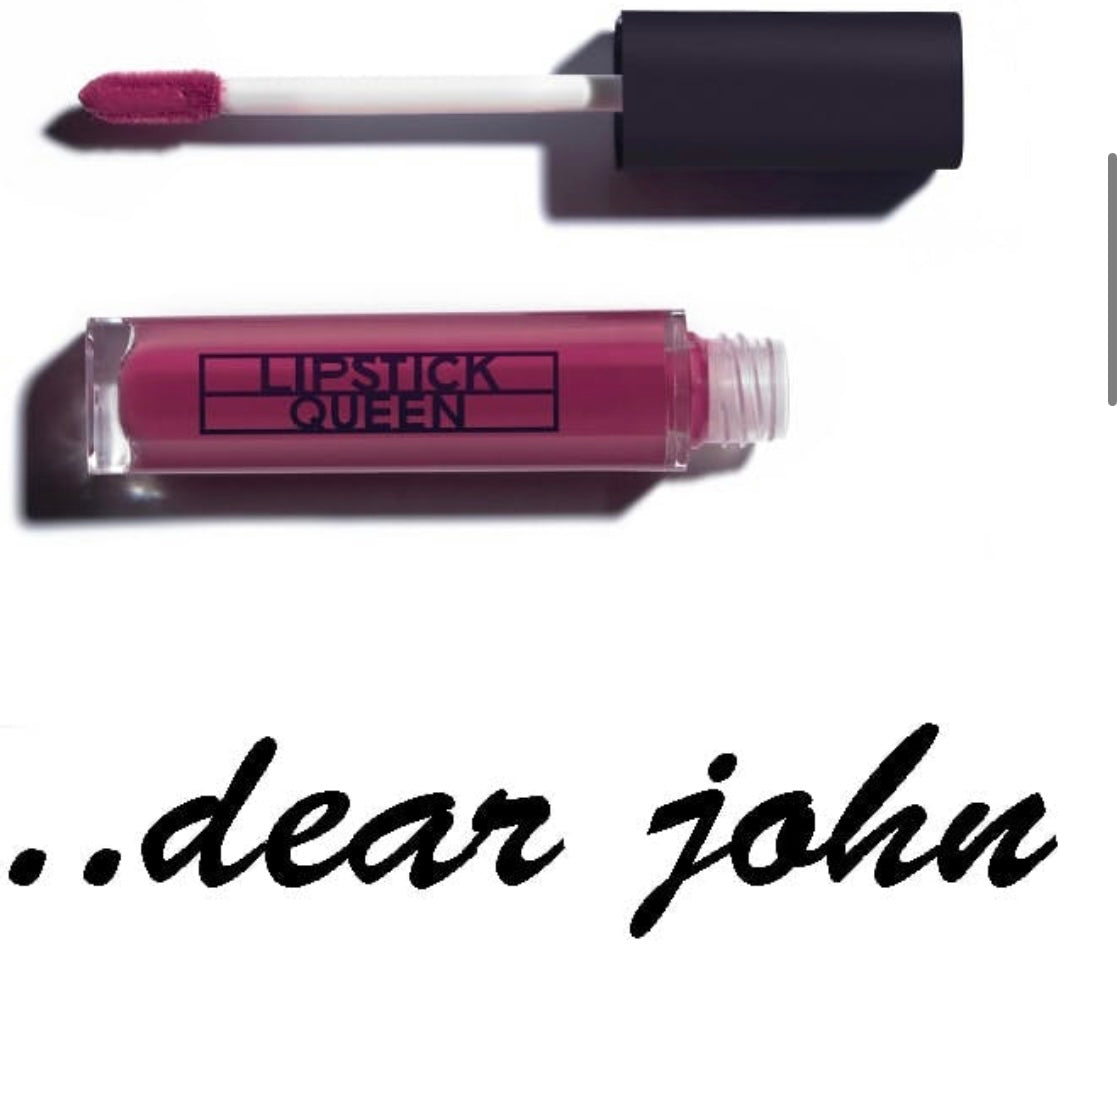 Lipstick Queen Famous Last Words Matte Liquid Lipstick In The Color "Dear John"